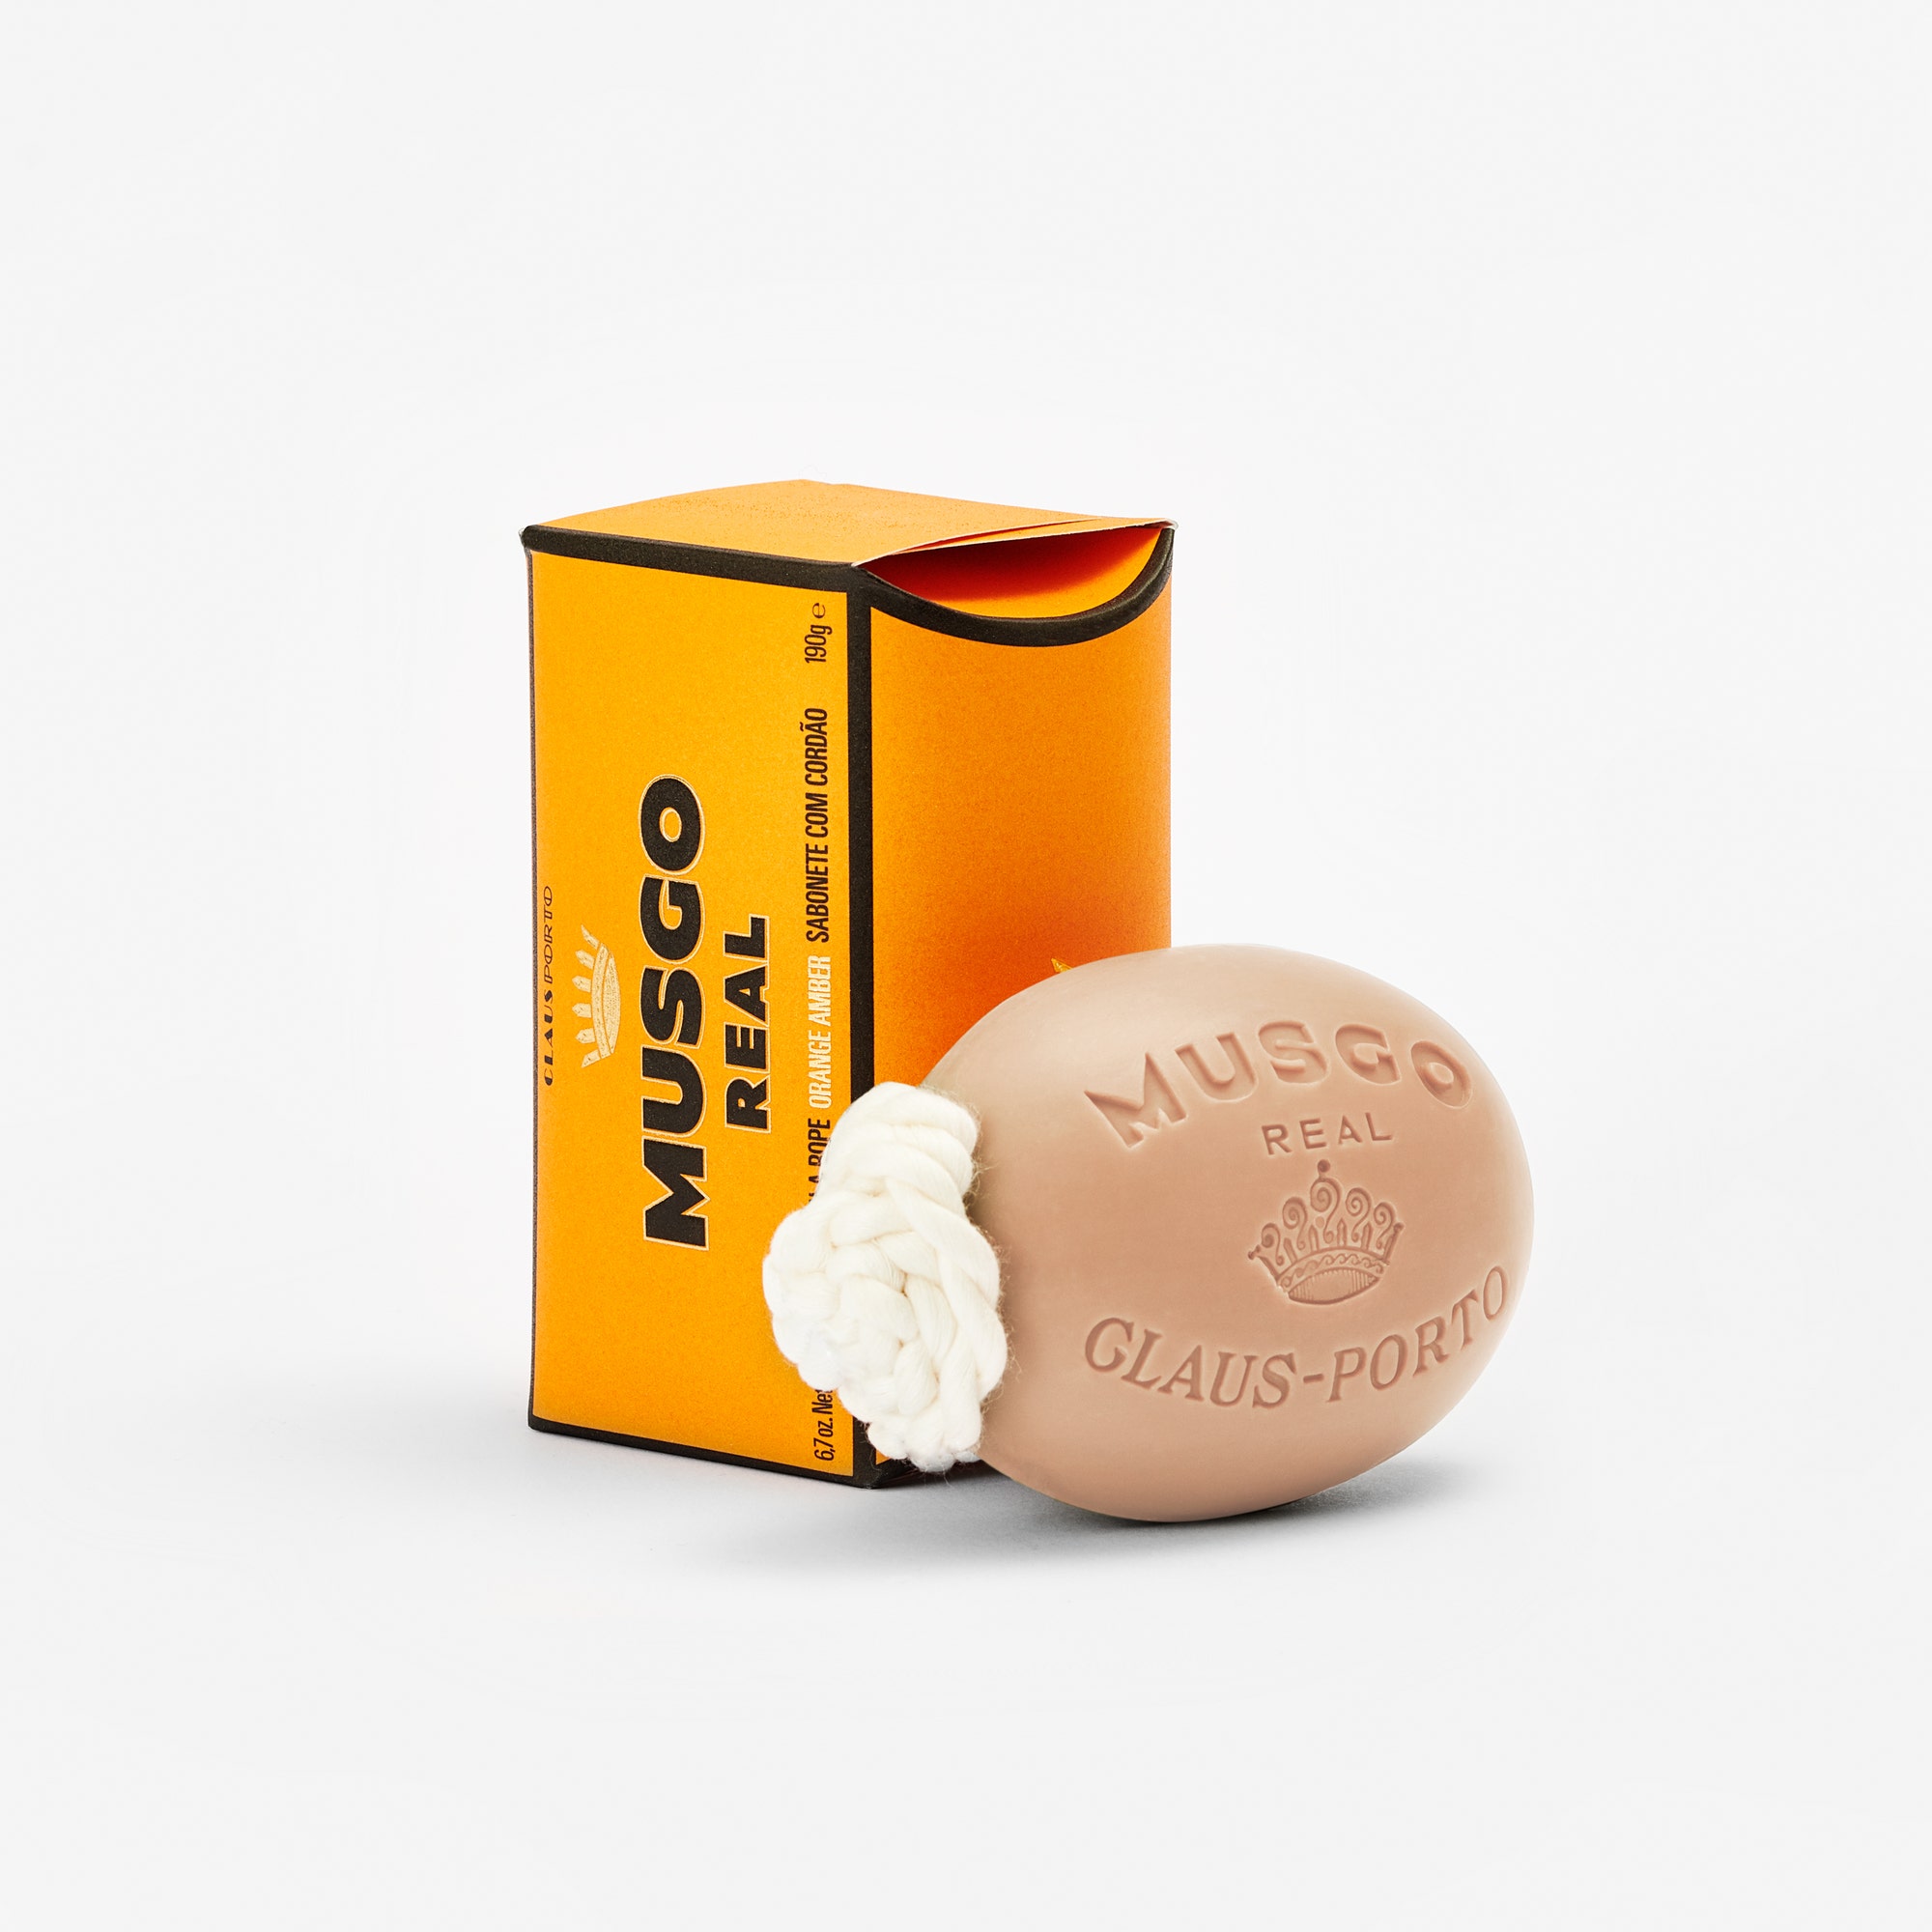 Claus Porto 190g Orange Amber Musgo Real Soap